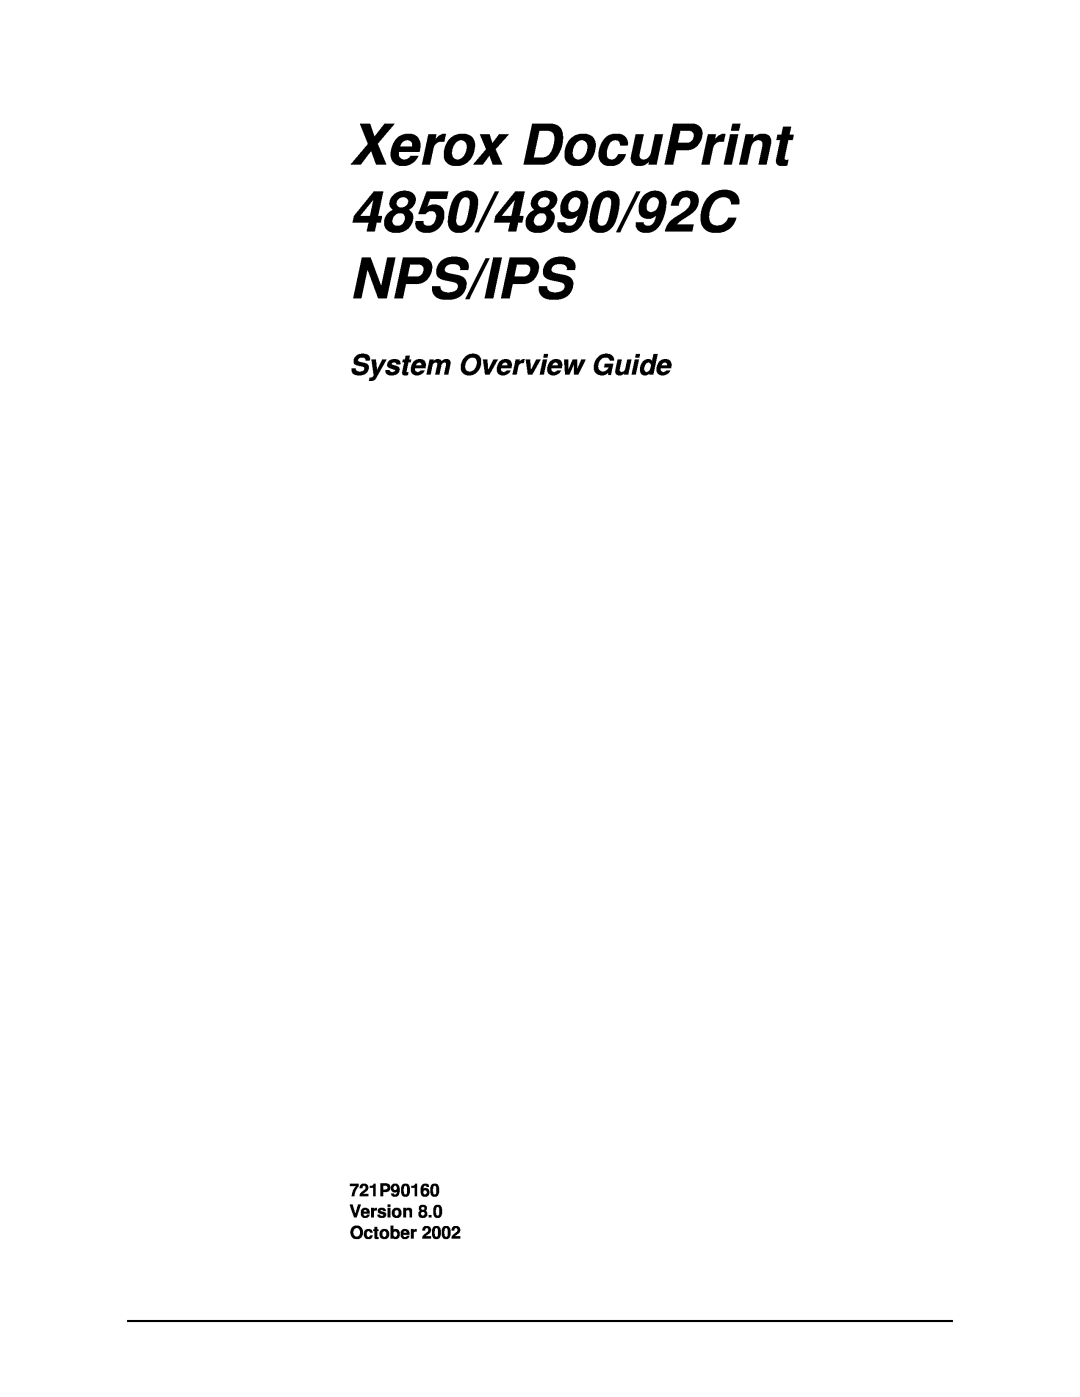 Xerox manual Xerox DocuPrint 4850/4890/92C NPS/IPS, System Overview Guide 